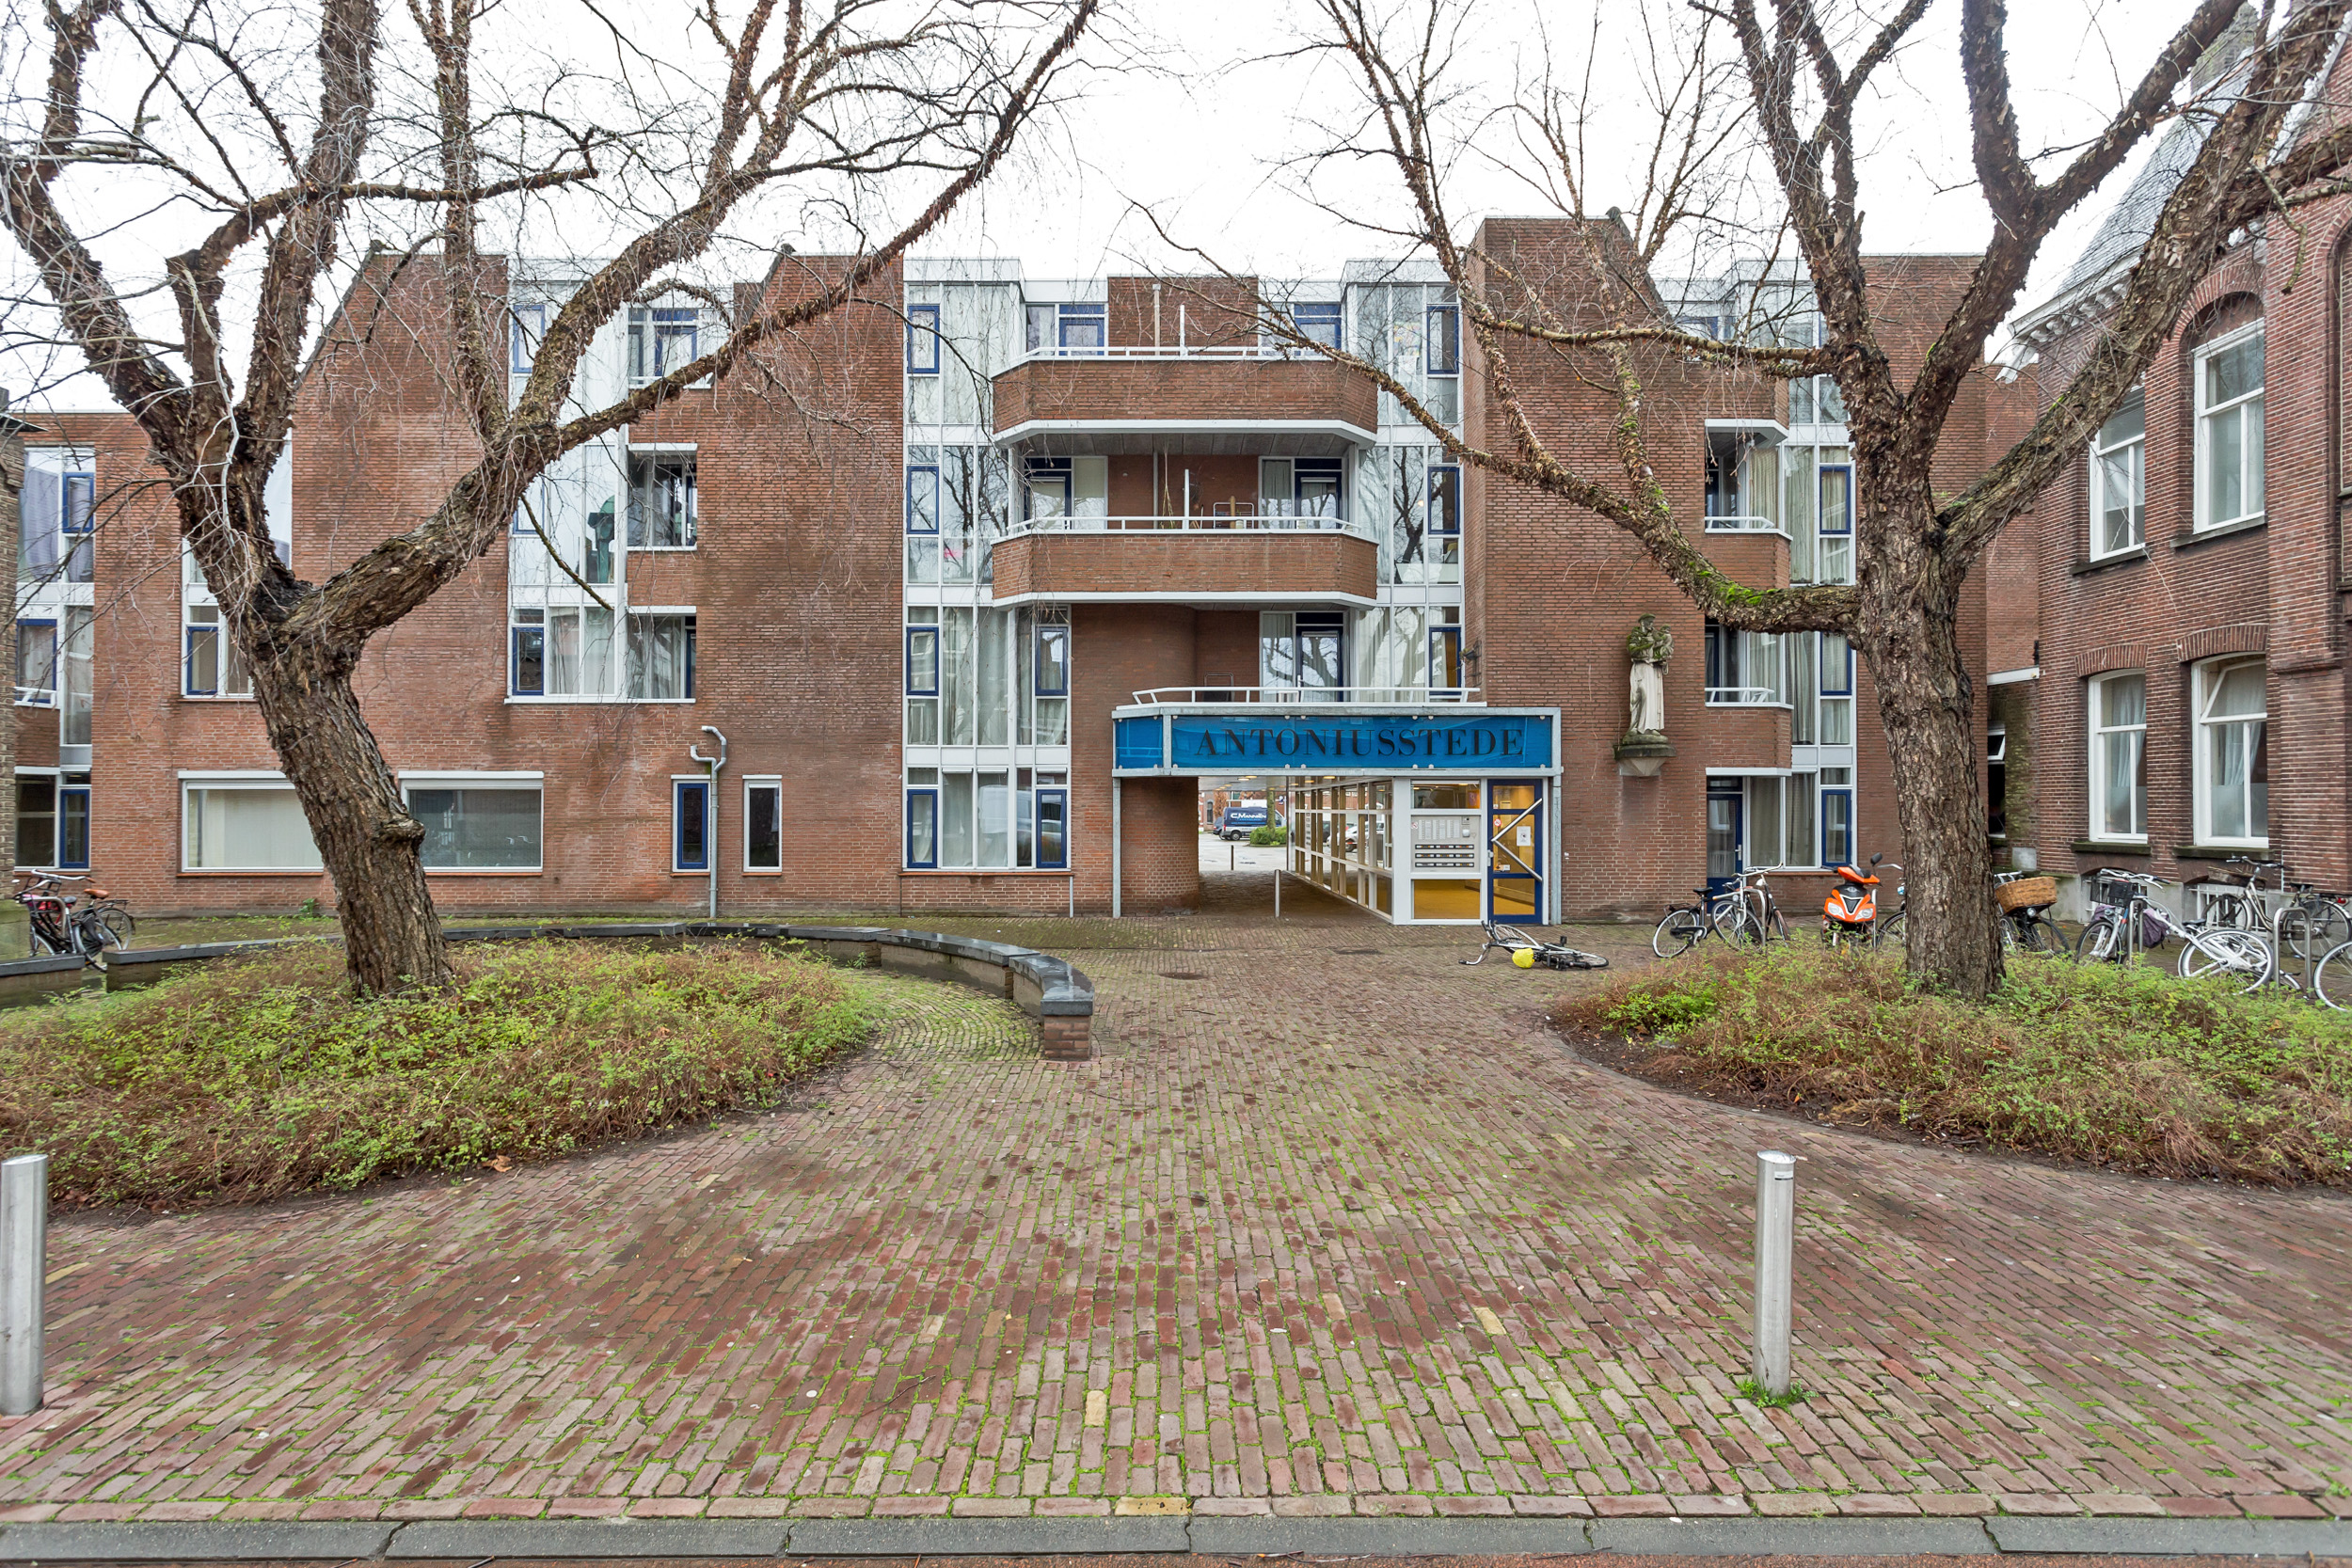 Antoniusstede 77, 4702 XS Roosendaal, Nederland